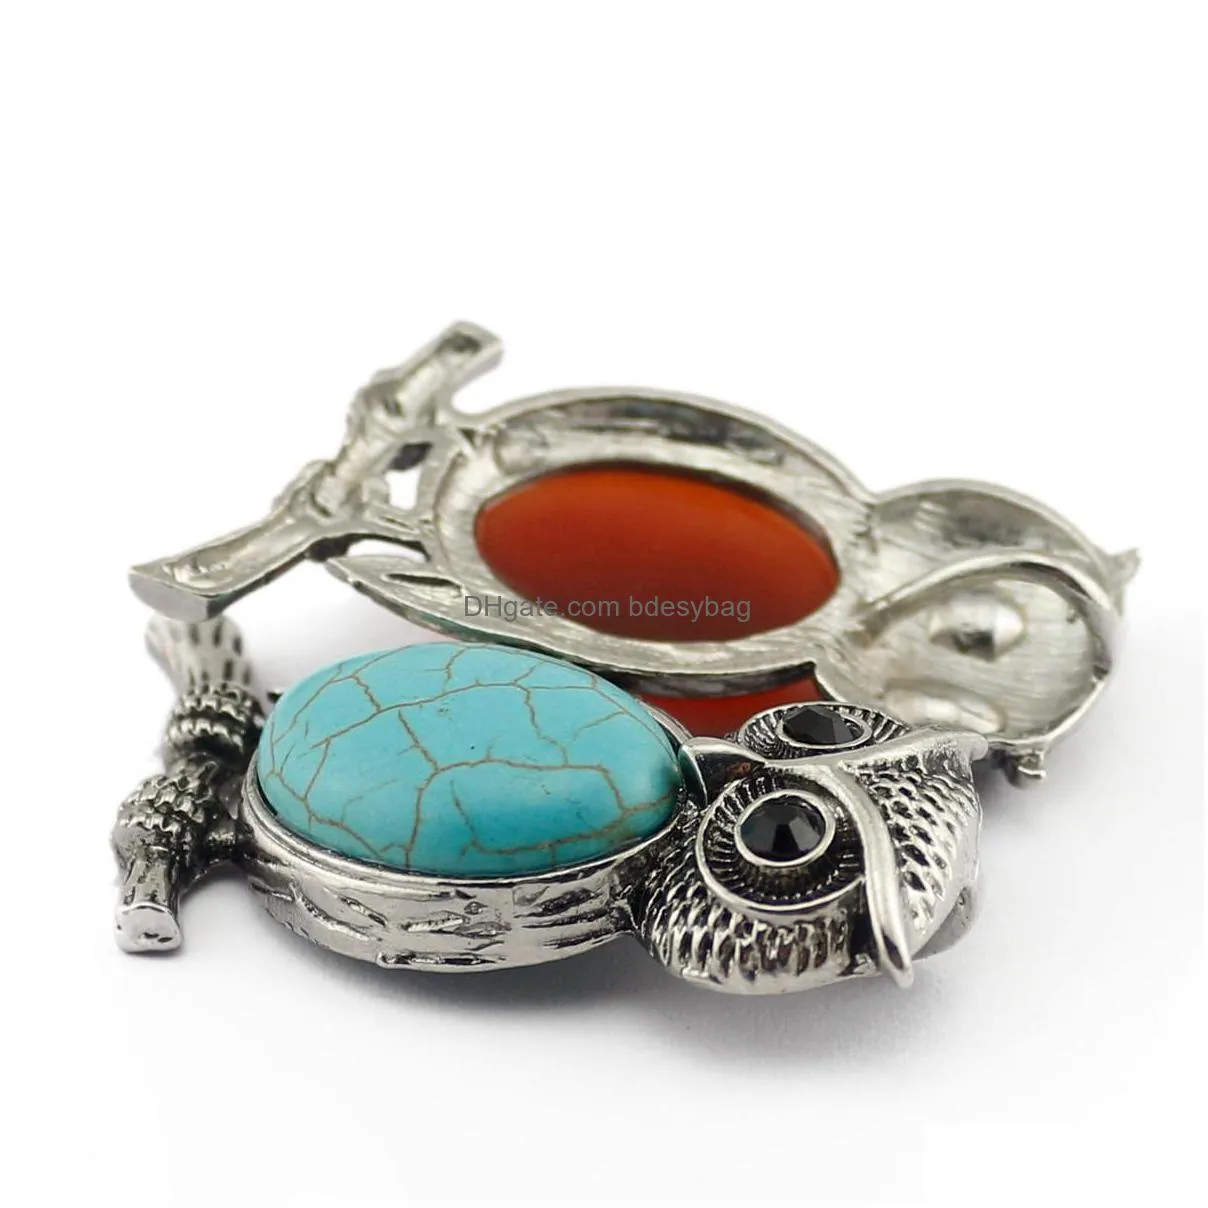 owl necklace healing crystal stones pendant necklaces for women men gemstone jewelry reiki spiritual energy lucky